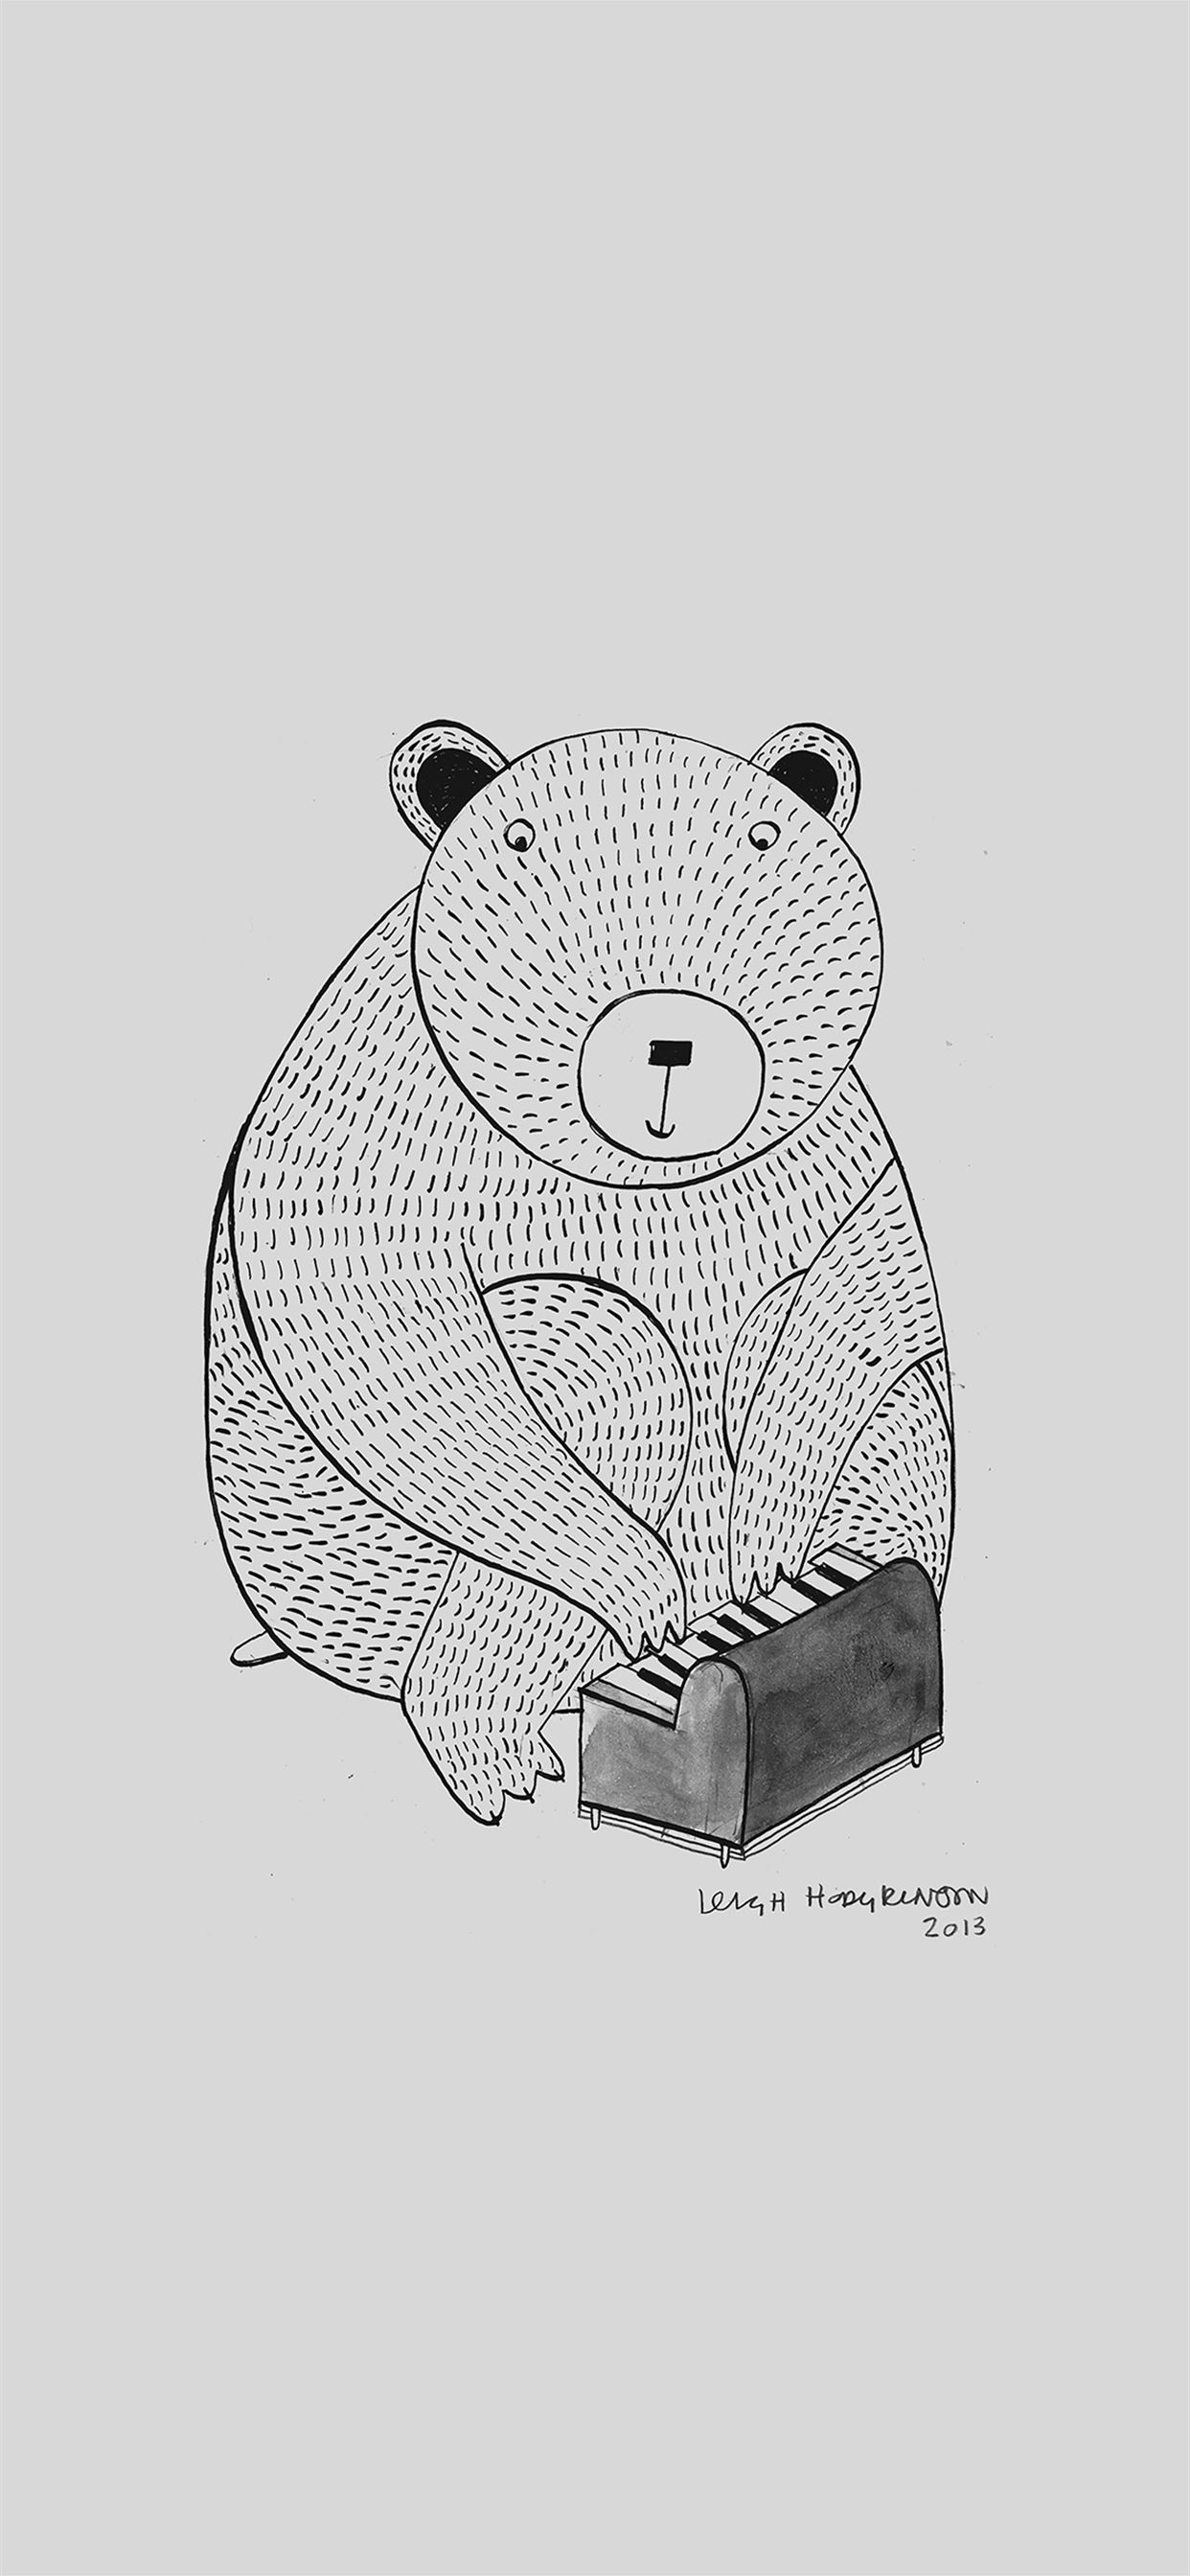 Pianobear Art Illust Cute Animal iPhone X Wallpaper Free Download